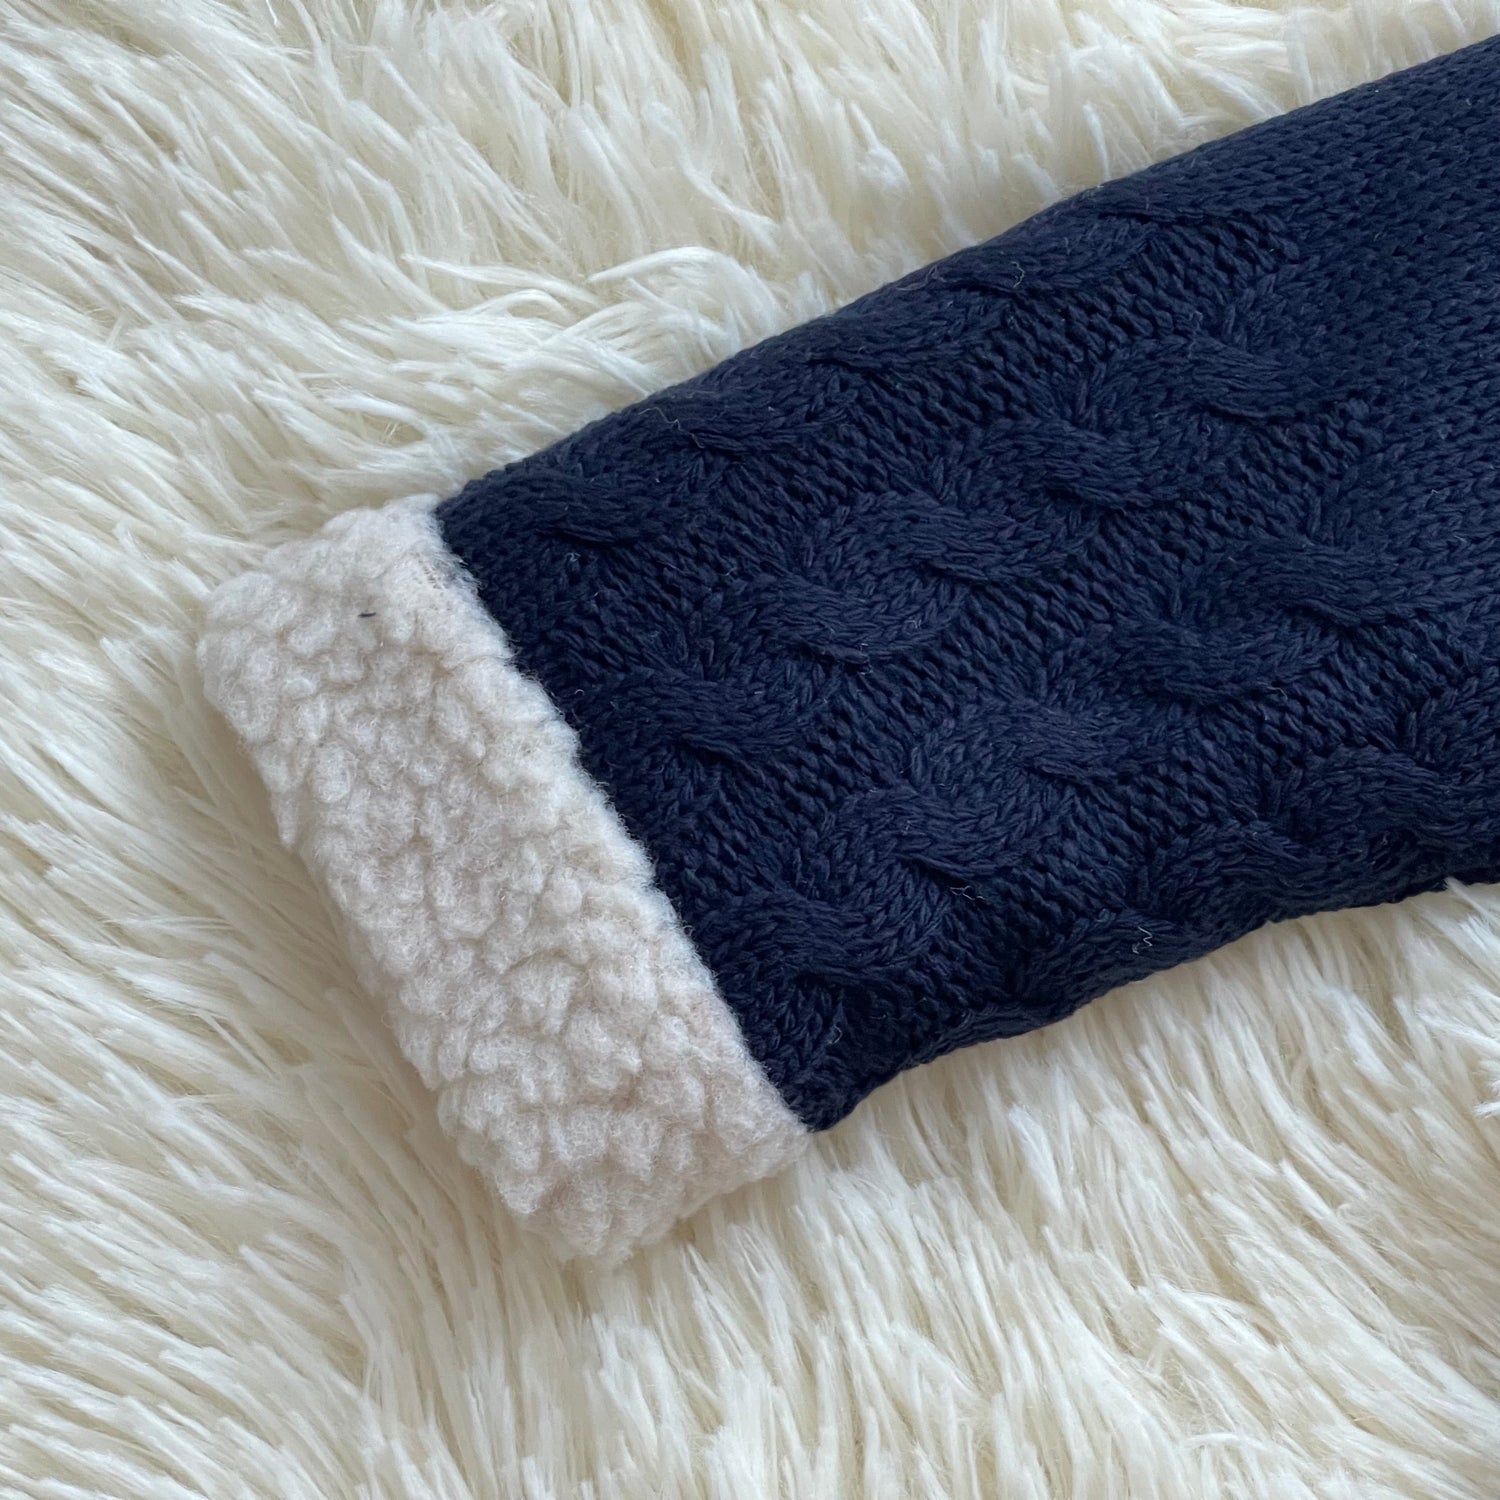 Comprar abrigo de lana para bebés. Interior de borreguito. Color azul. Temporada otoño/invierno. 